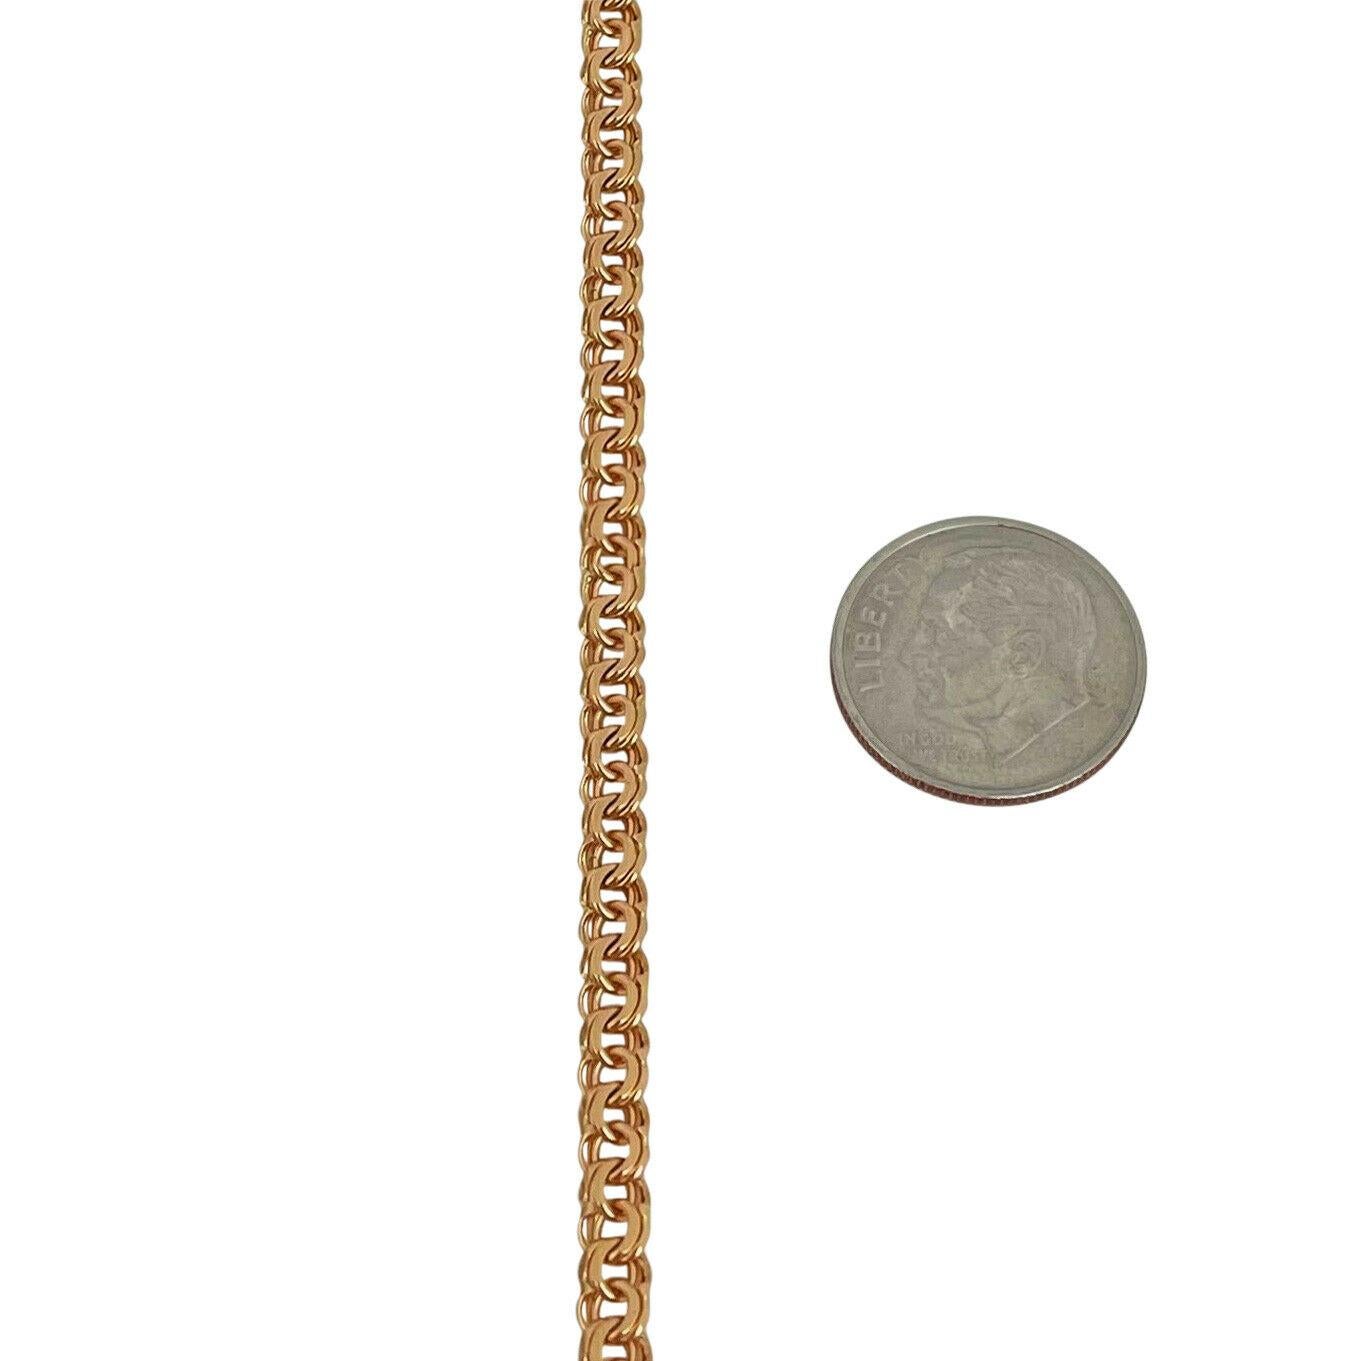 19k gold chain